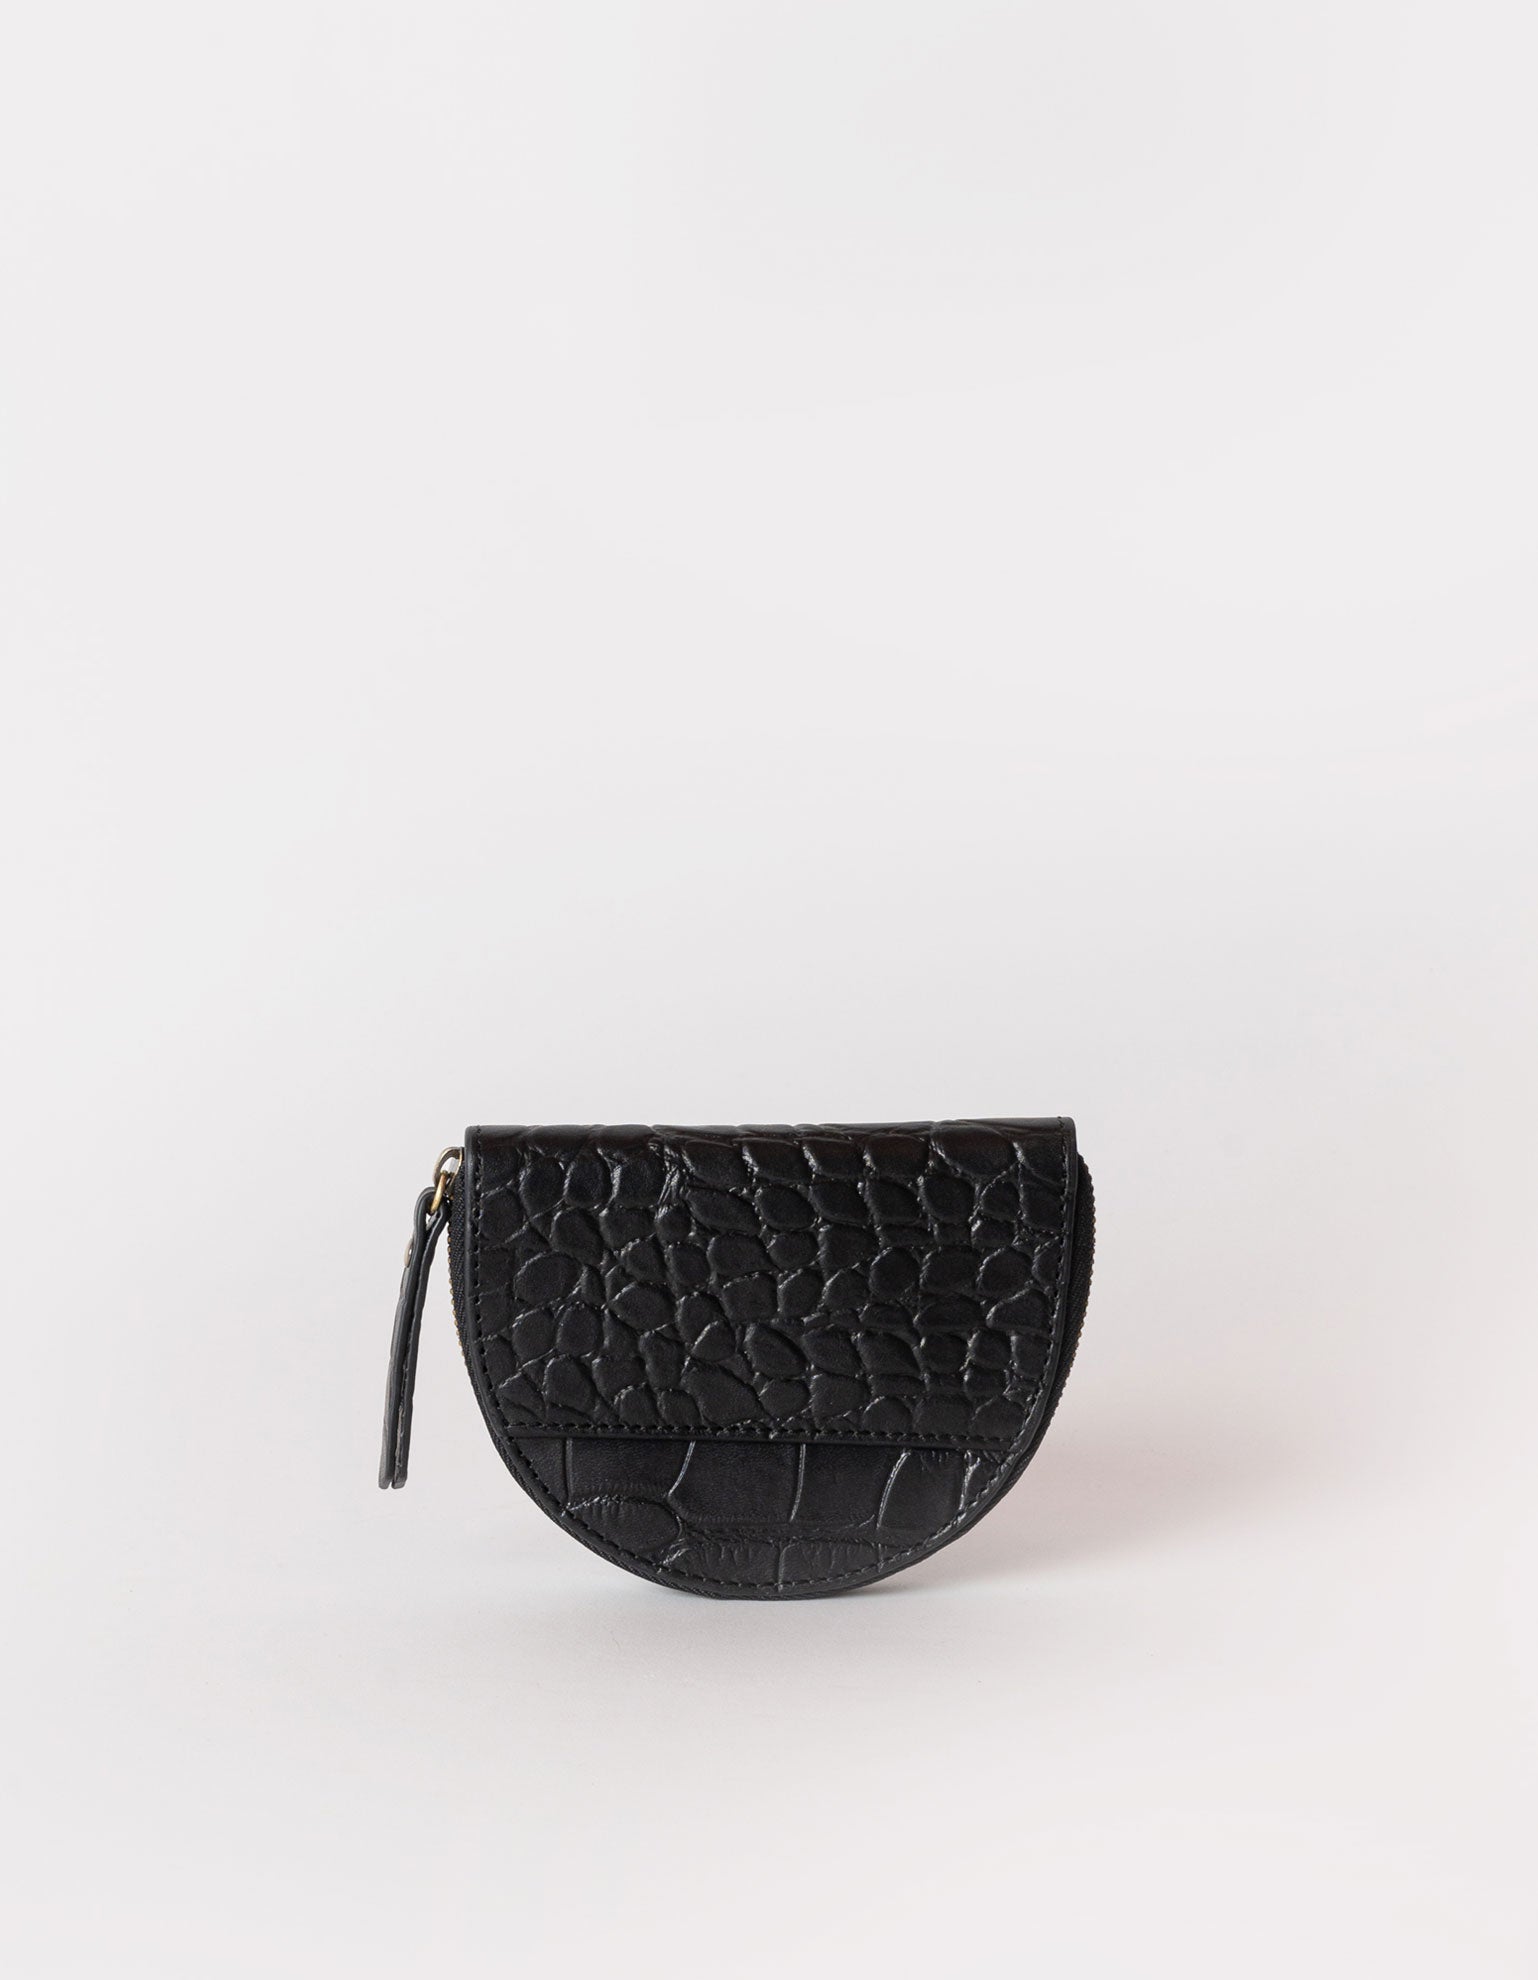 Lost Queen Pentagram Handbag Round - Gothic Crossbody Purse - Black Faux  Leather Bag: Handbags: Amazon.com